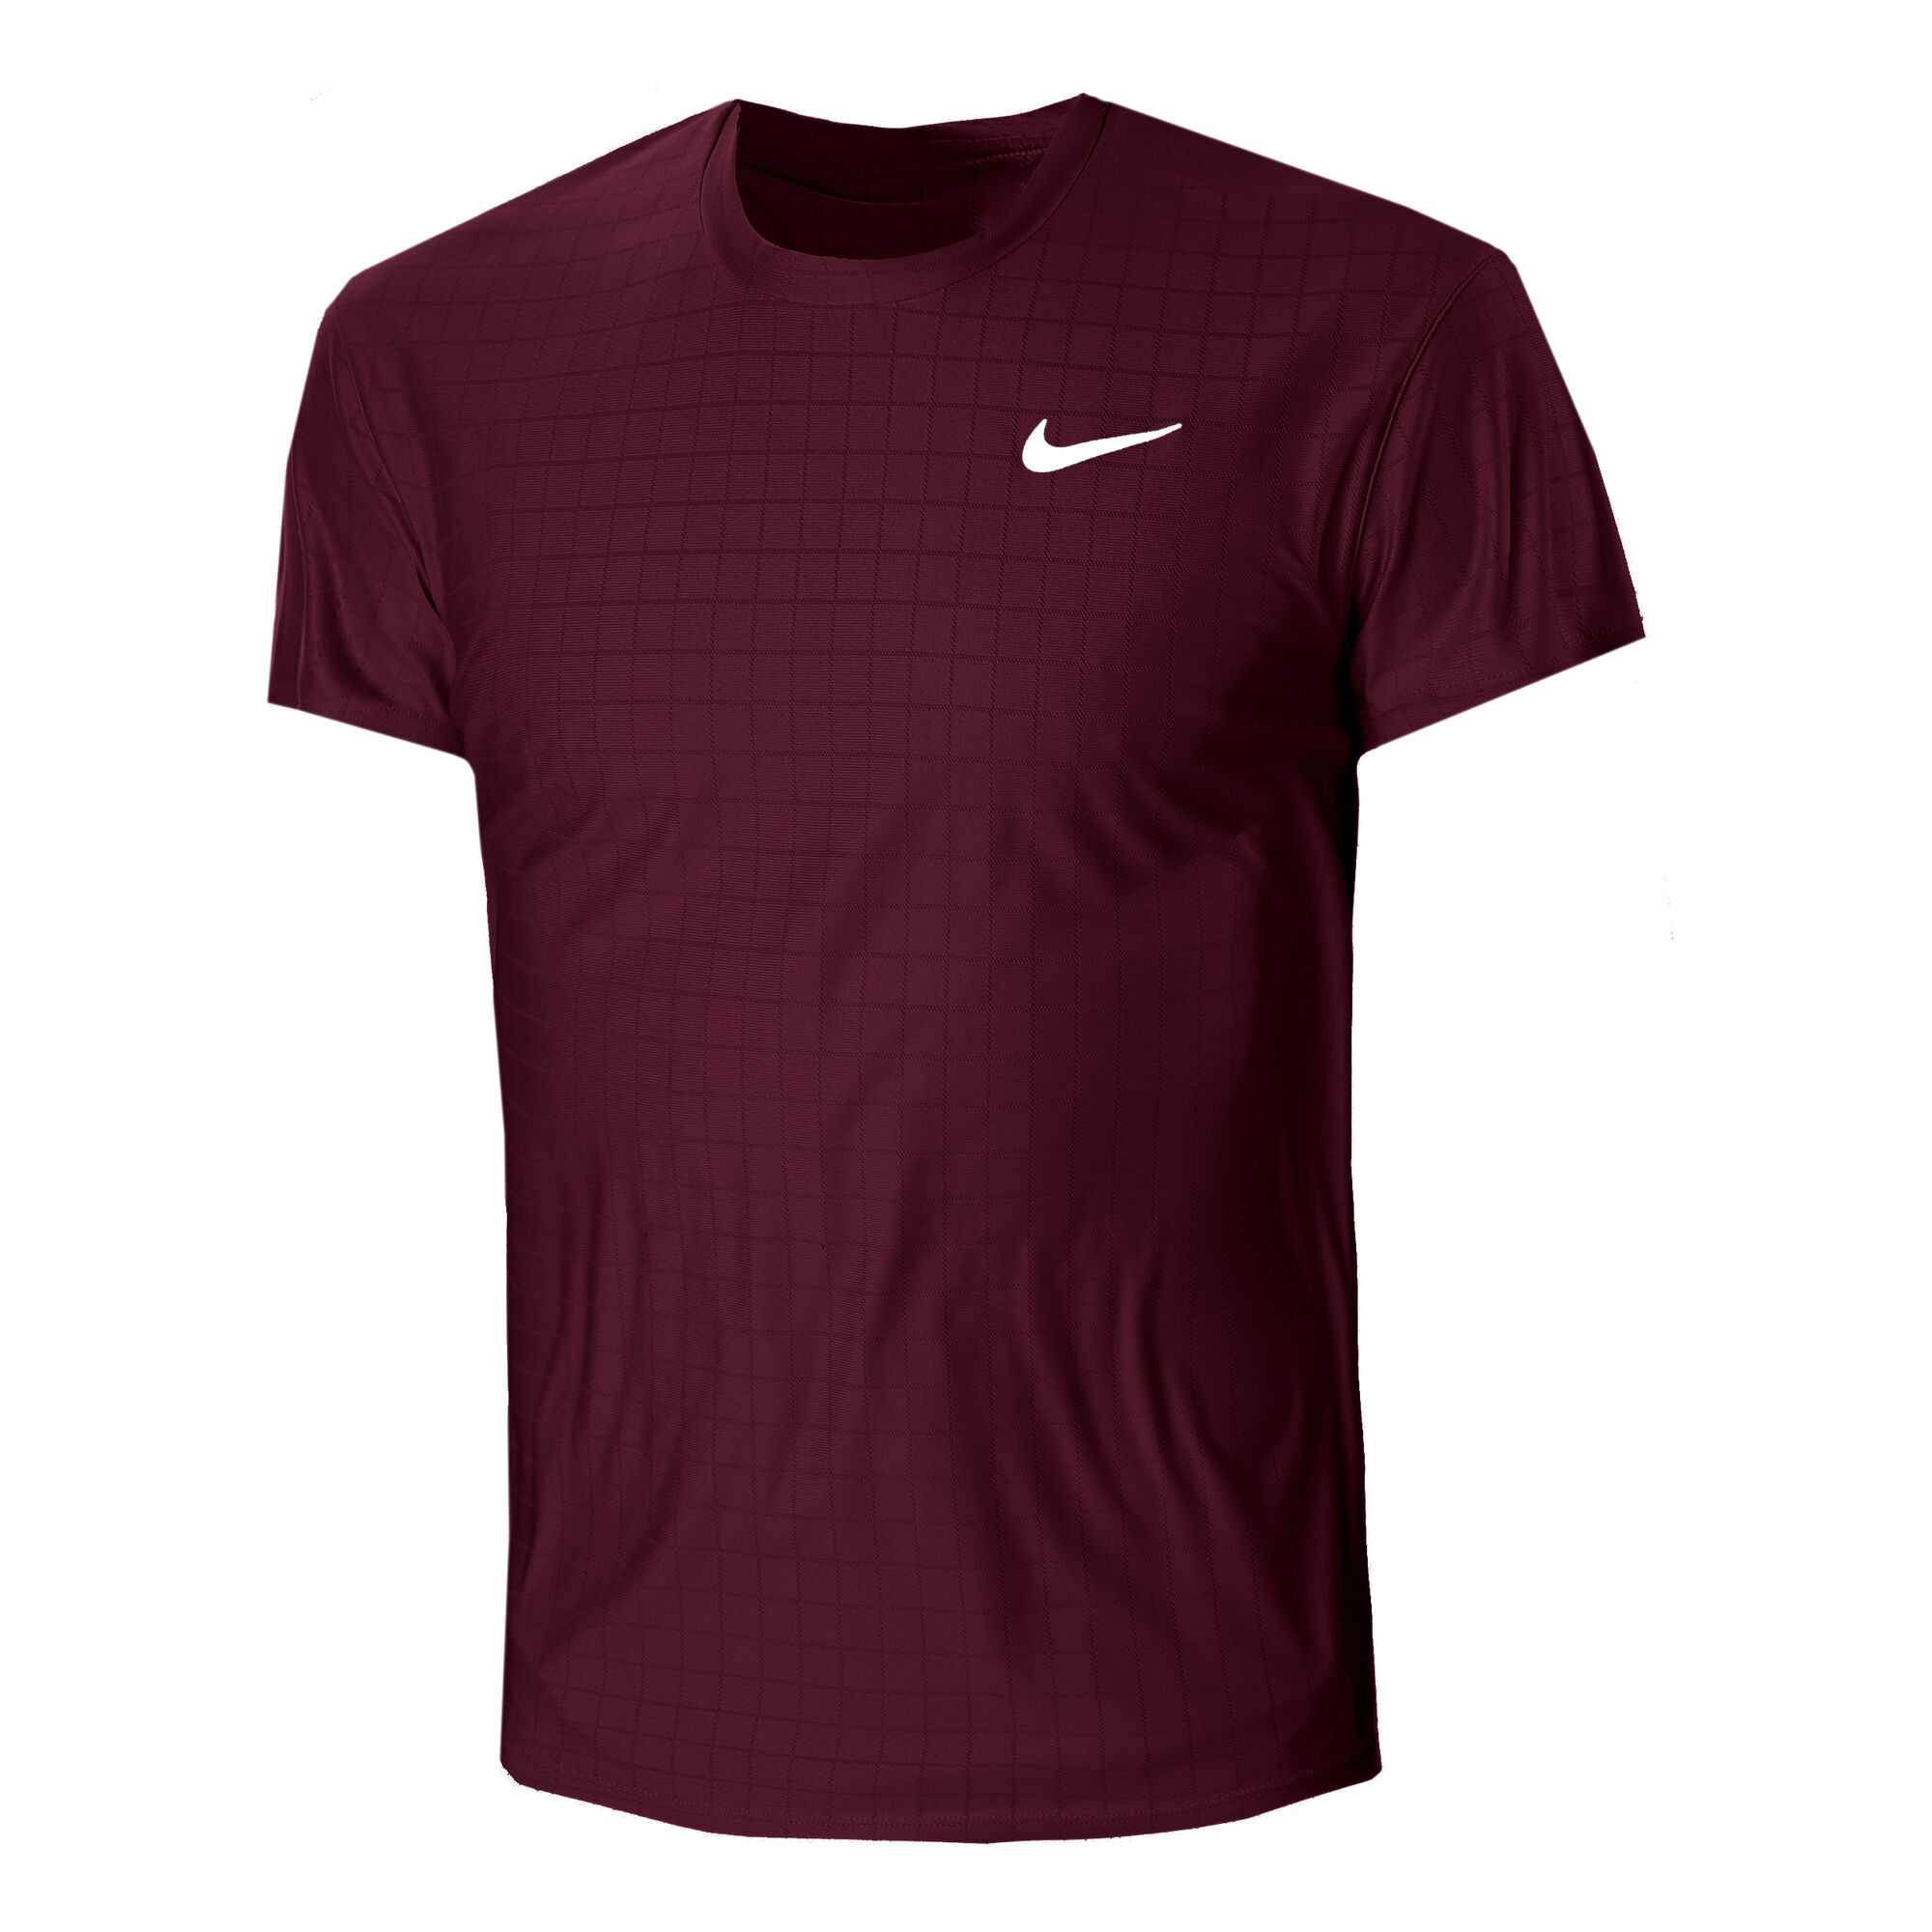 Buy Nike Dri-Fit Advantage T-Shirt Men Dark Red online | Tennis Point UK